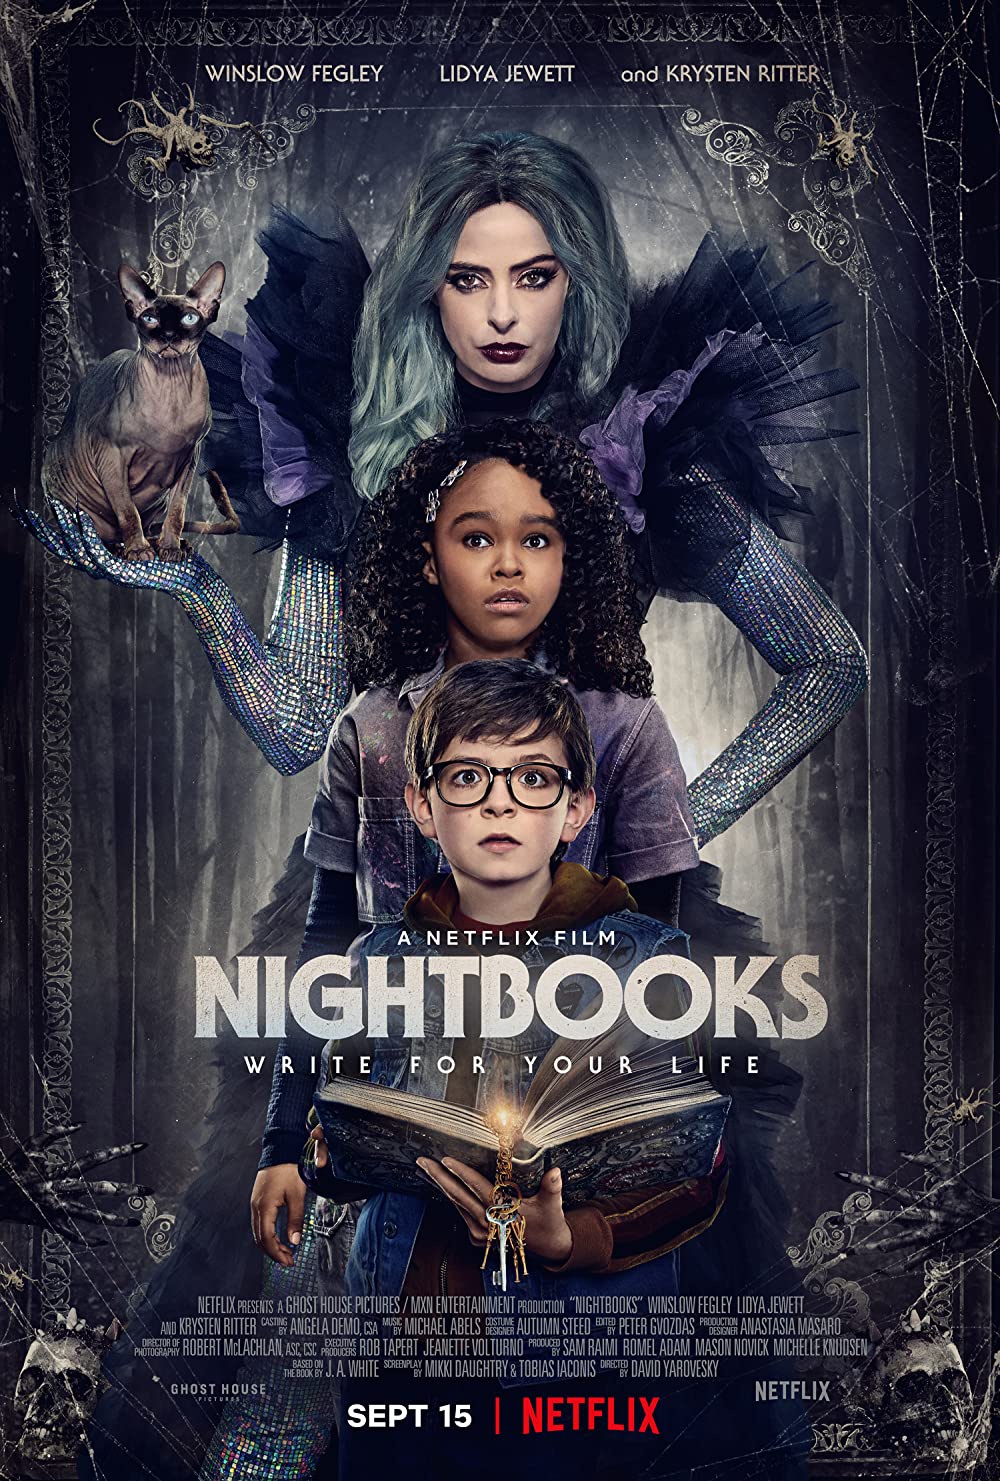 Netflix Nightbooks Trailer, Coming to Netflix in September 2021